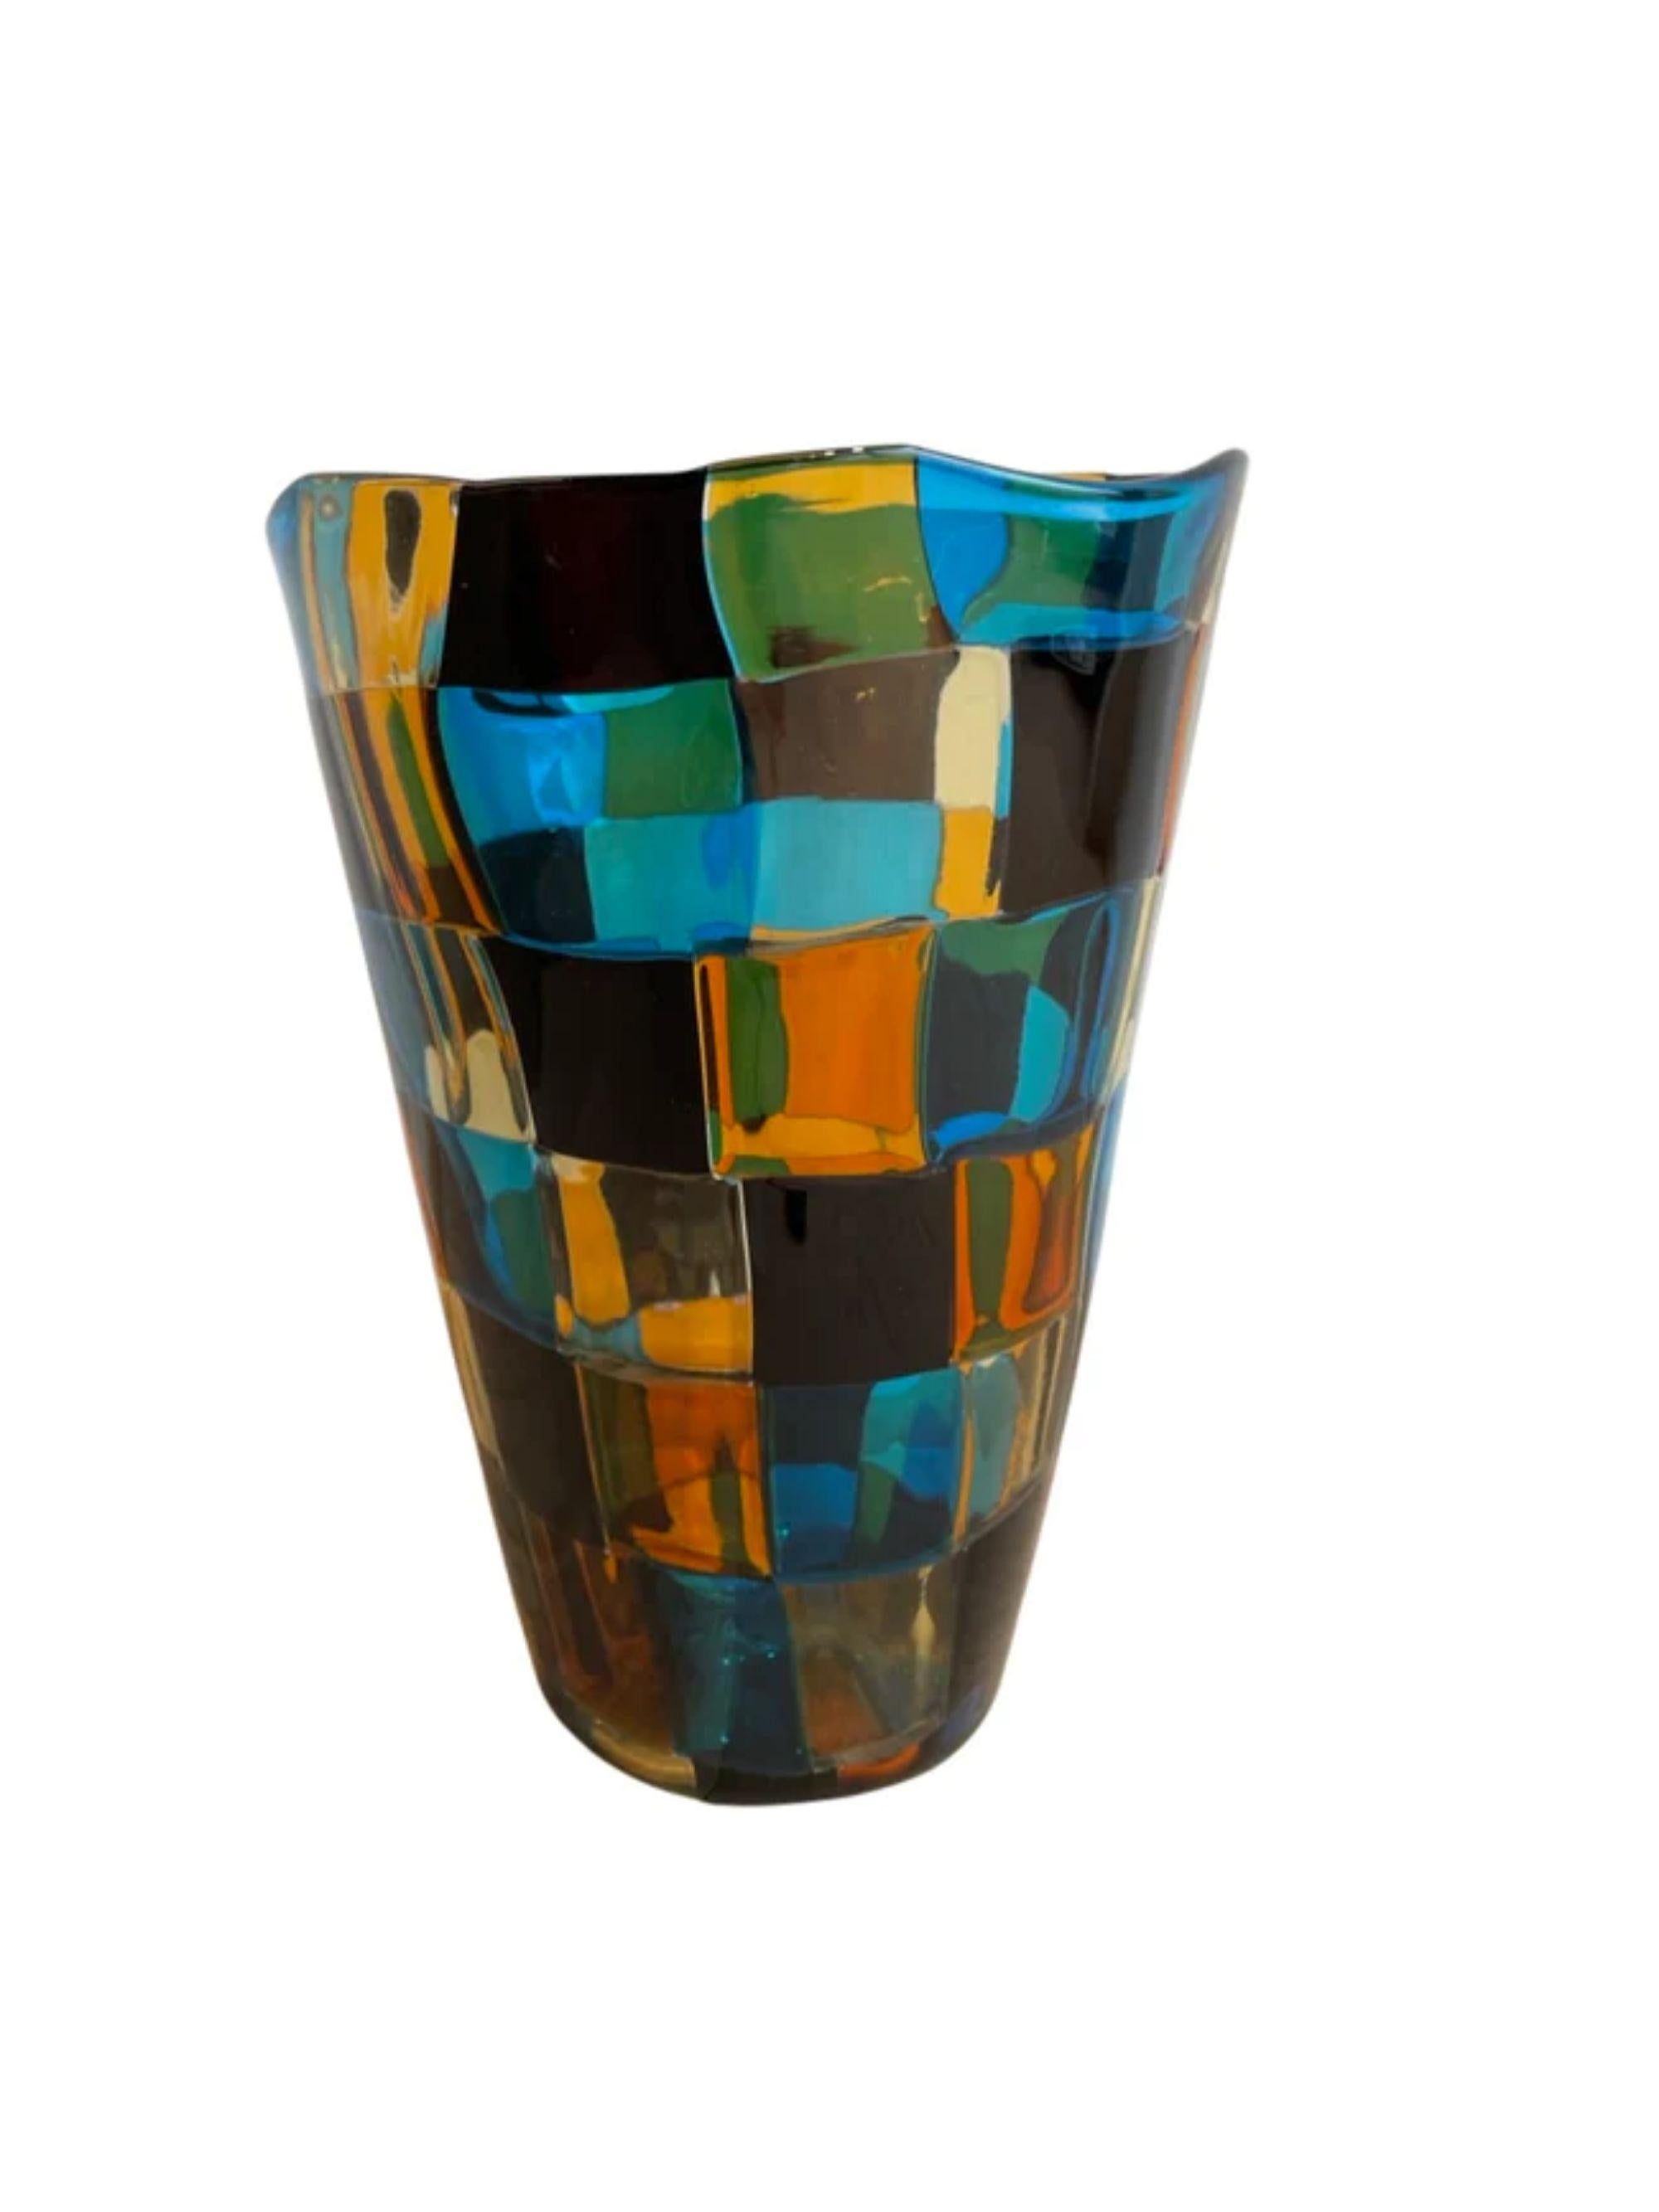 Fulvio Bianconi model 1329 “Pezzato” vase for Venini, Italy, 1950s

Additional Information:
Materials: Polychrome patchwork glass
Dimensions: 9 1/4